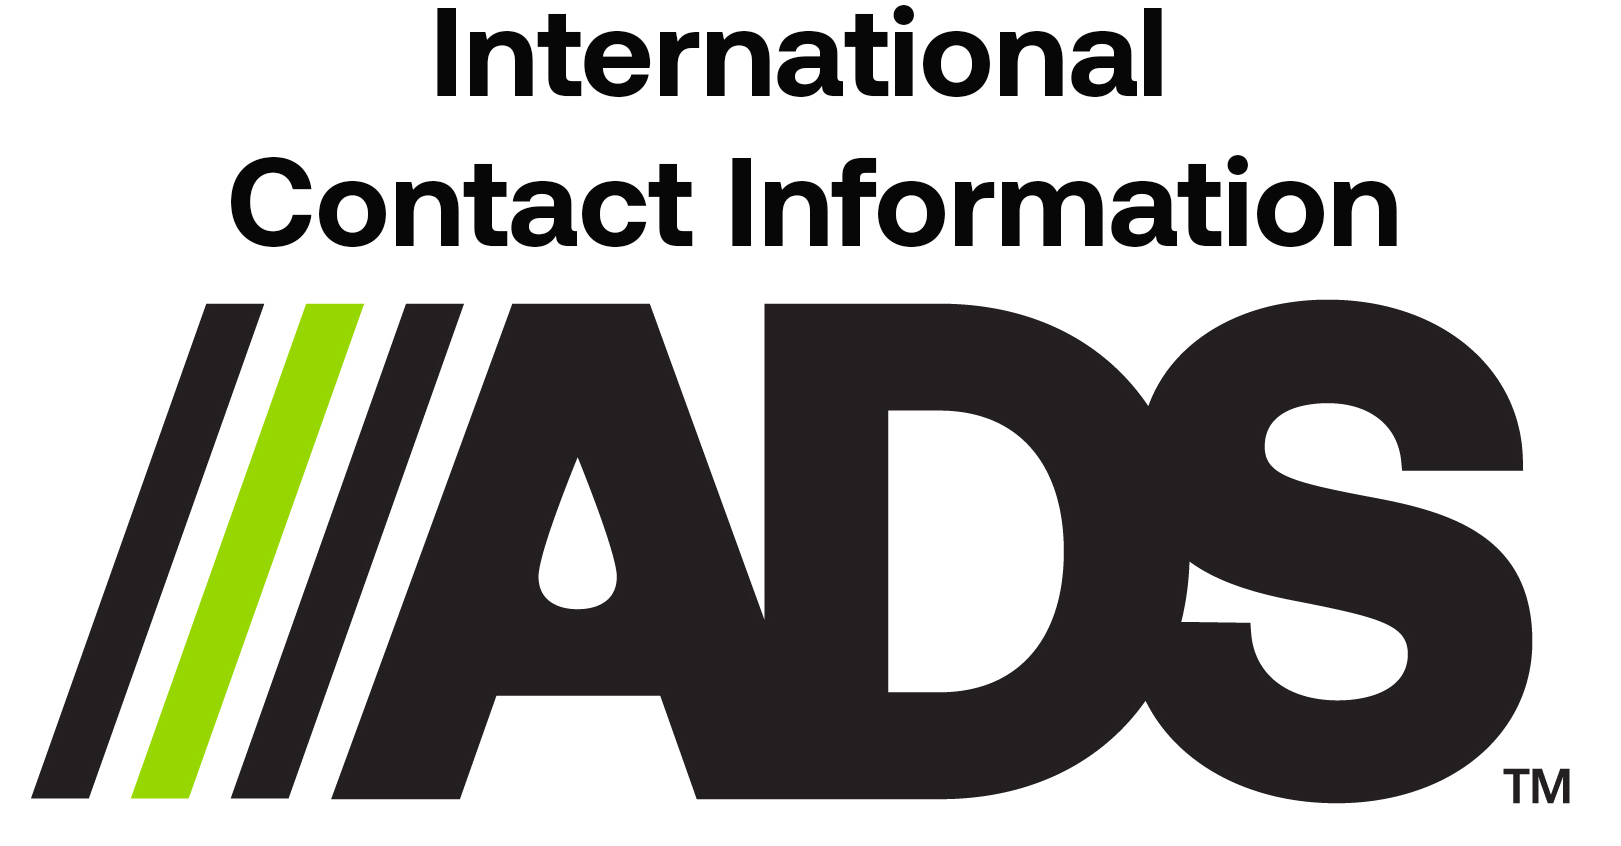 International Contact Information